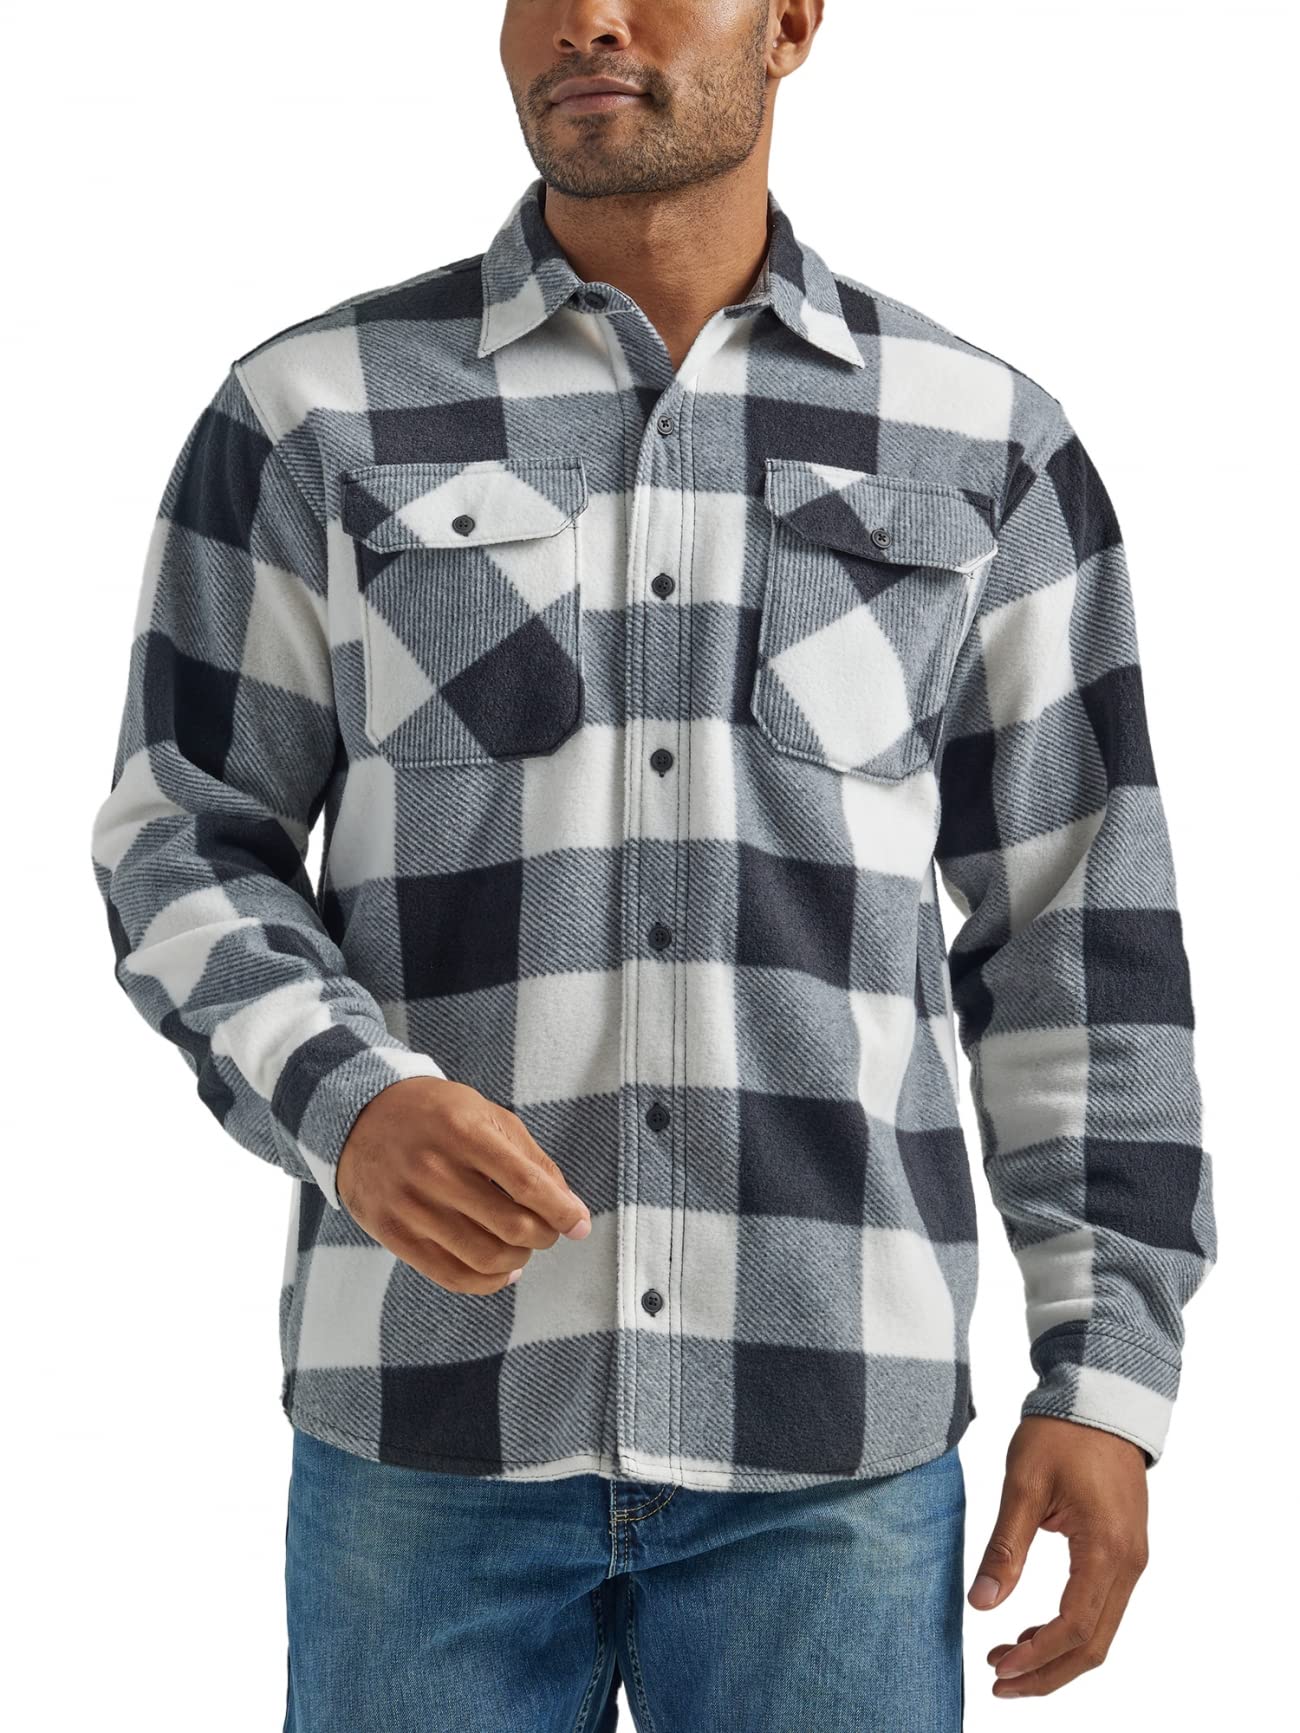 Wrangler Authentics Men's Long Sleeve Heavyweight Fleece Shirt, Birch Buffalo, X-Large